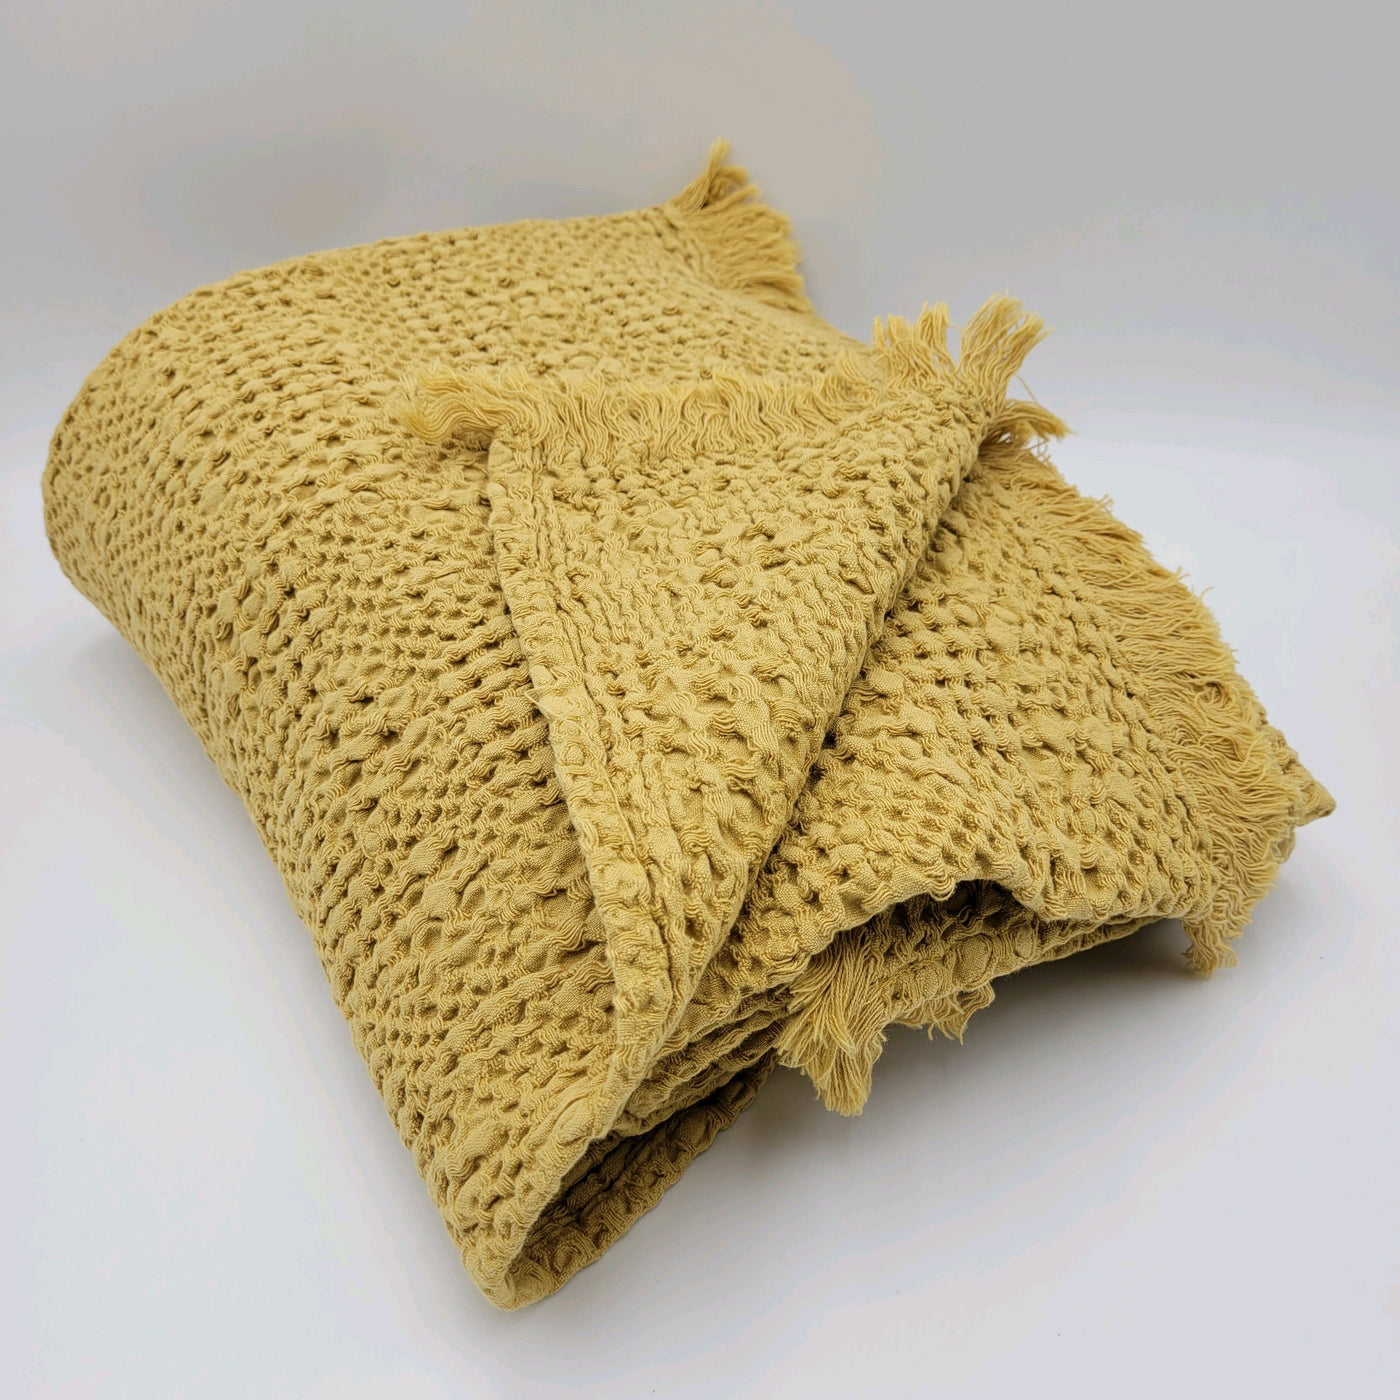 Textil Mantas y plaids Fibras naturales Amarillo